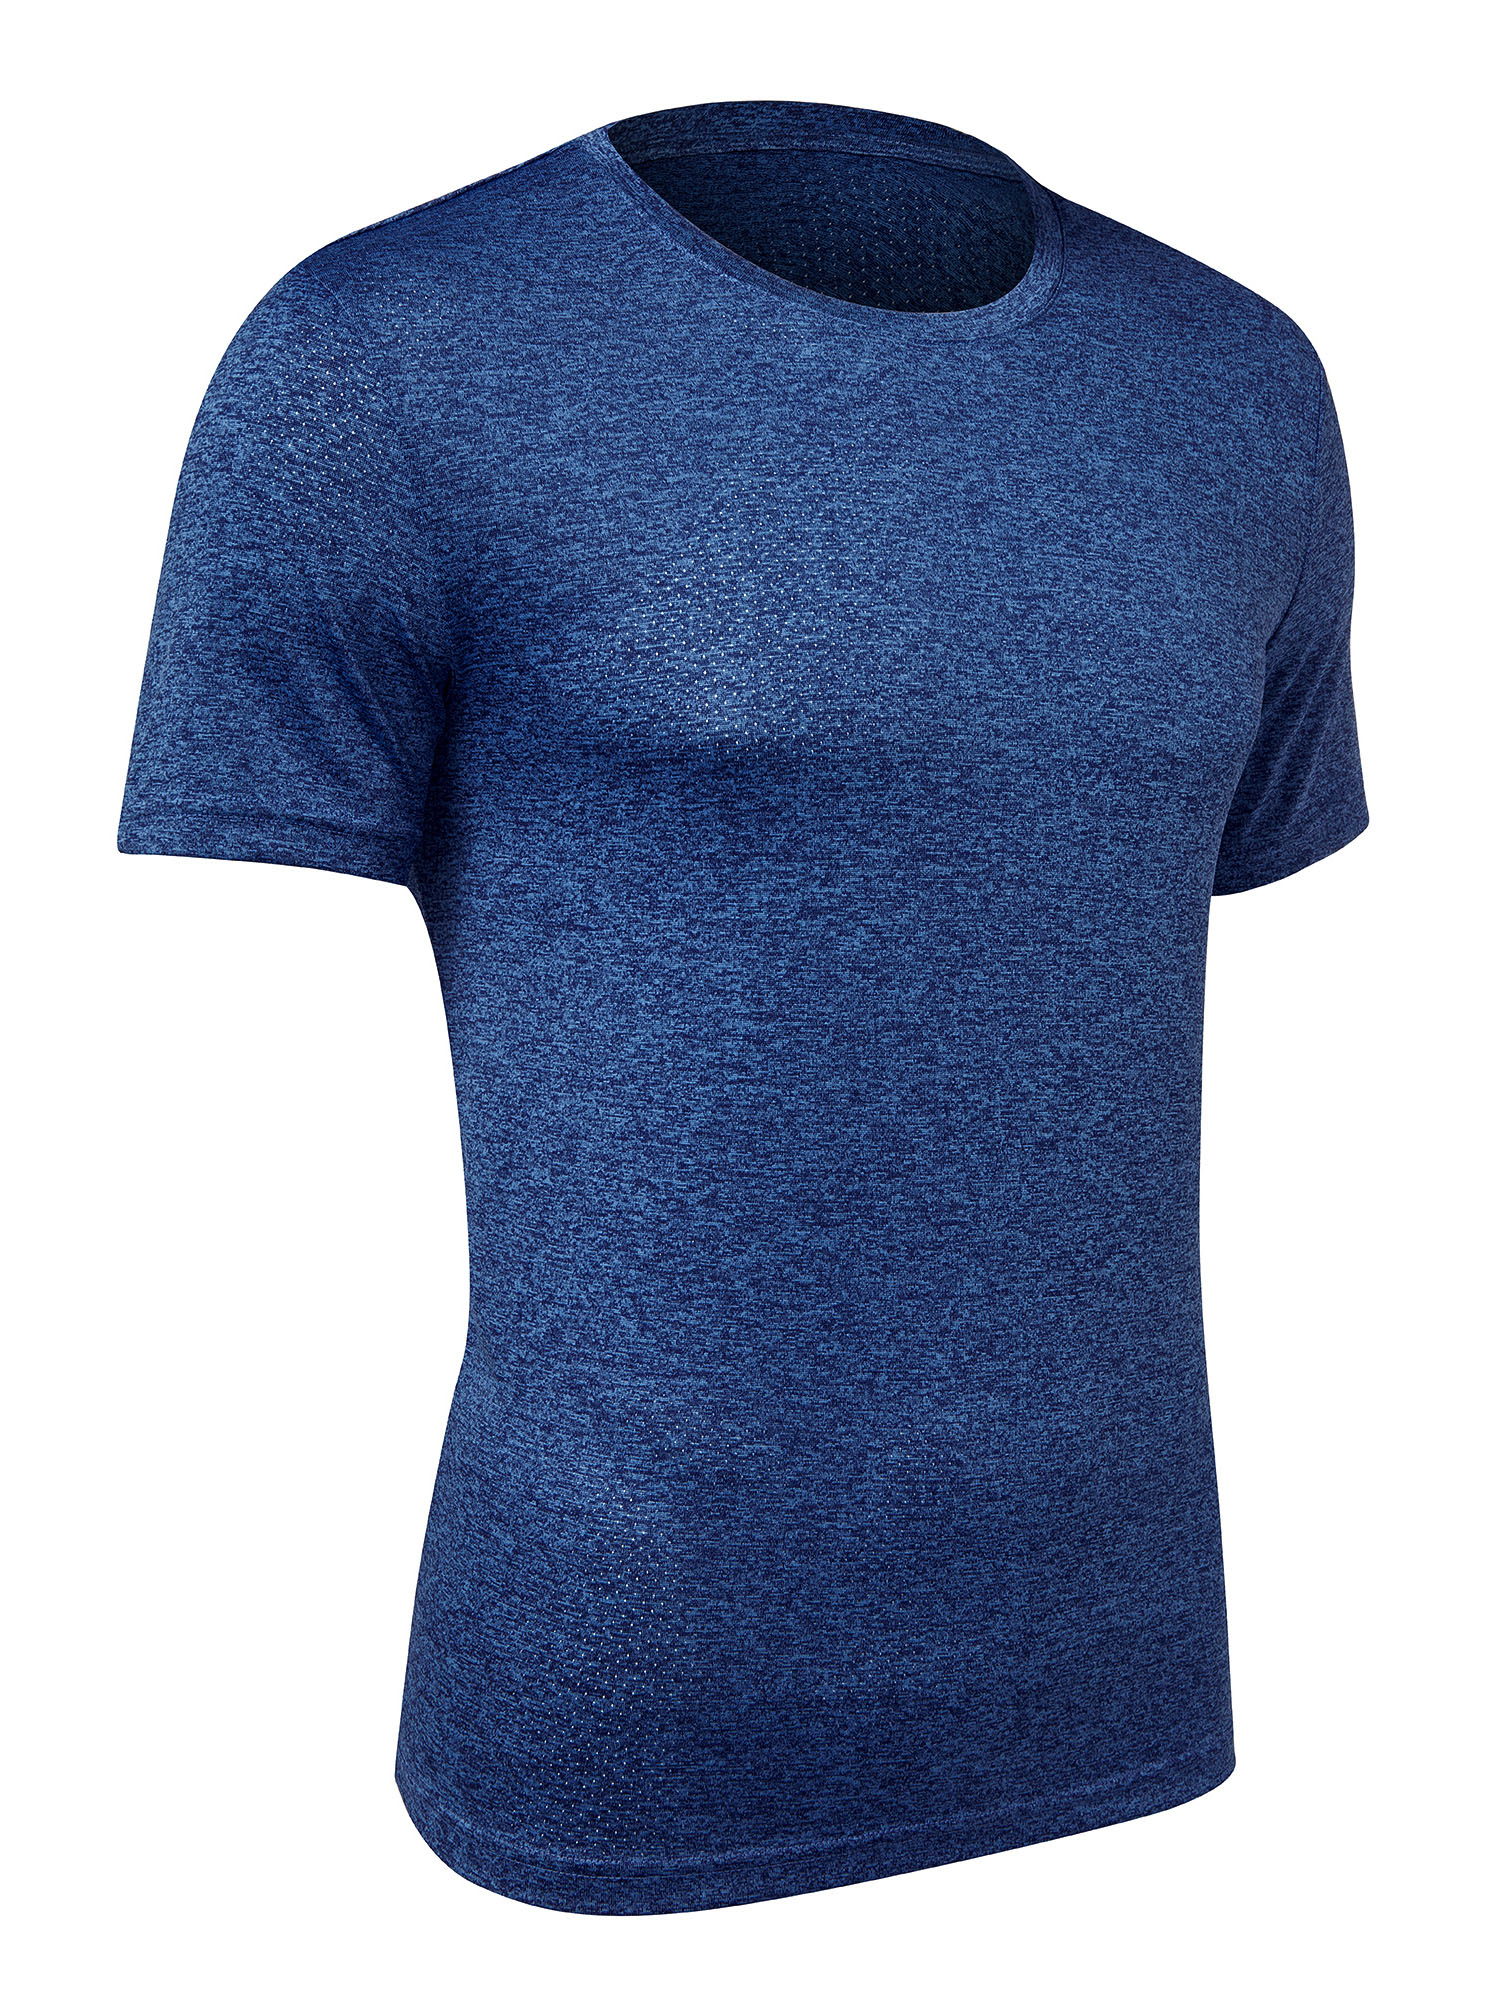 LELINTA Men's Short Sleeve Rashguard Mens Rashguard UPF 50+ Swimwear Swim Shirt Blue, 2XL - image 3 of 8